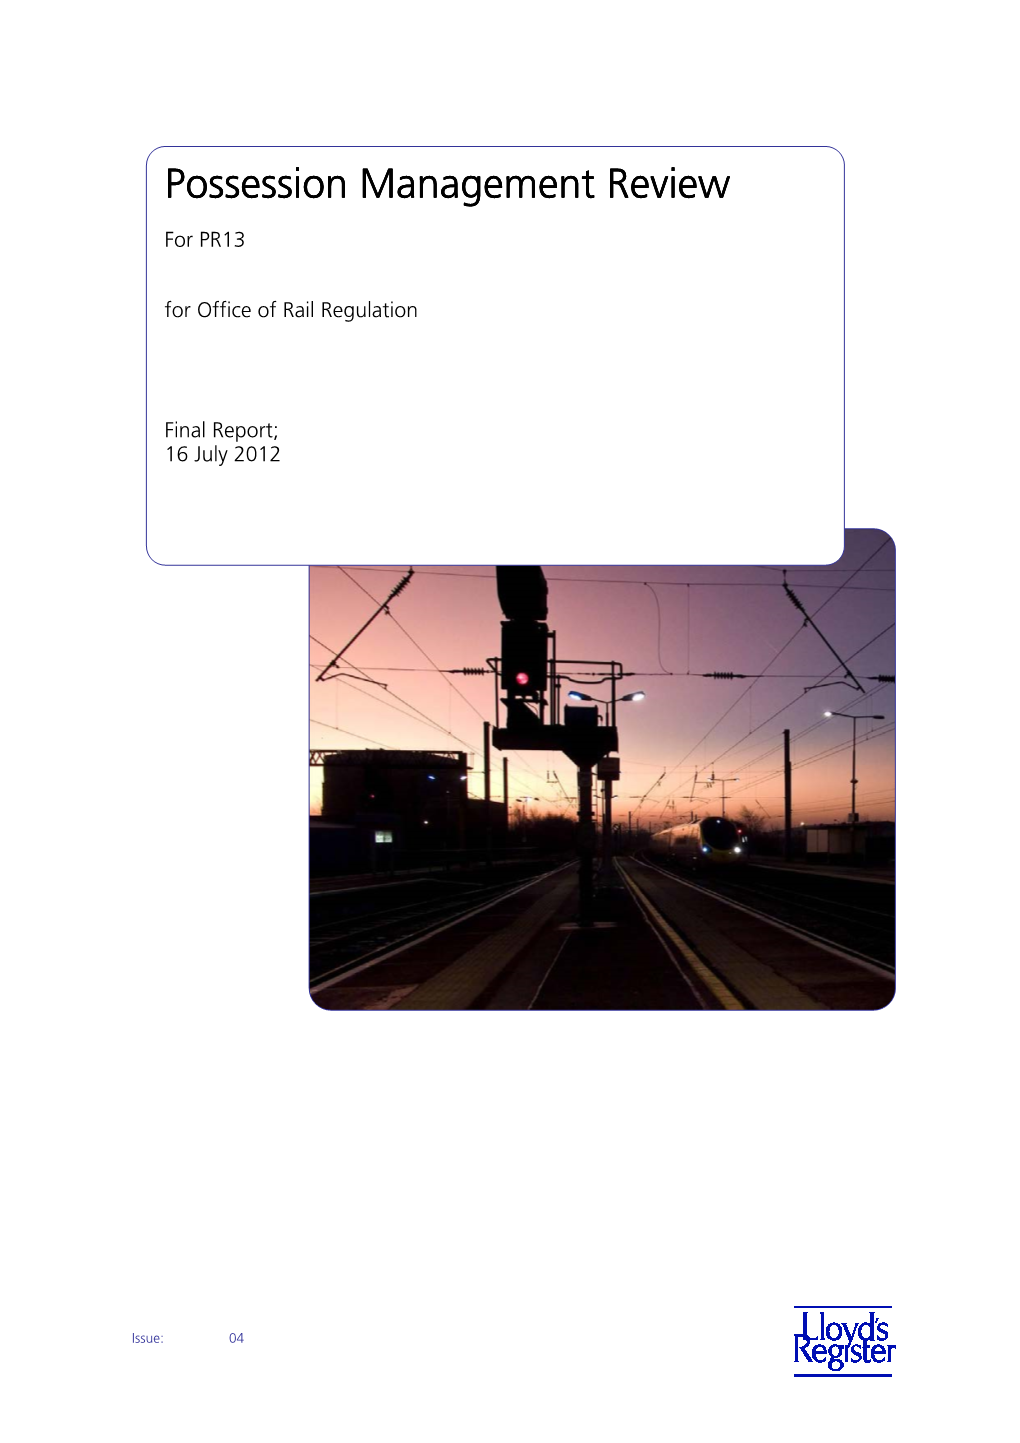 Network Rail Possession Management Review